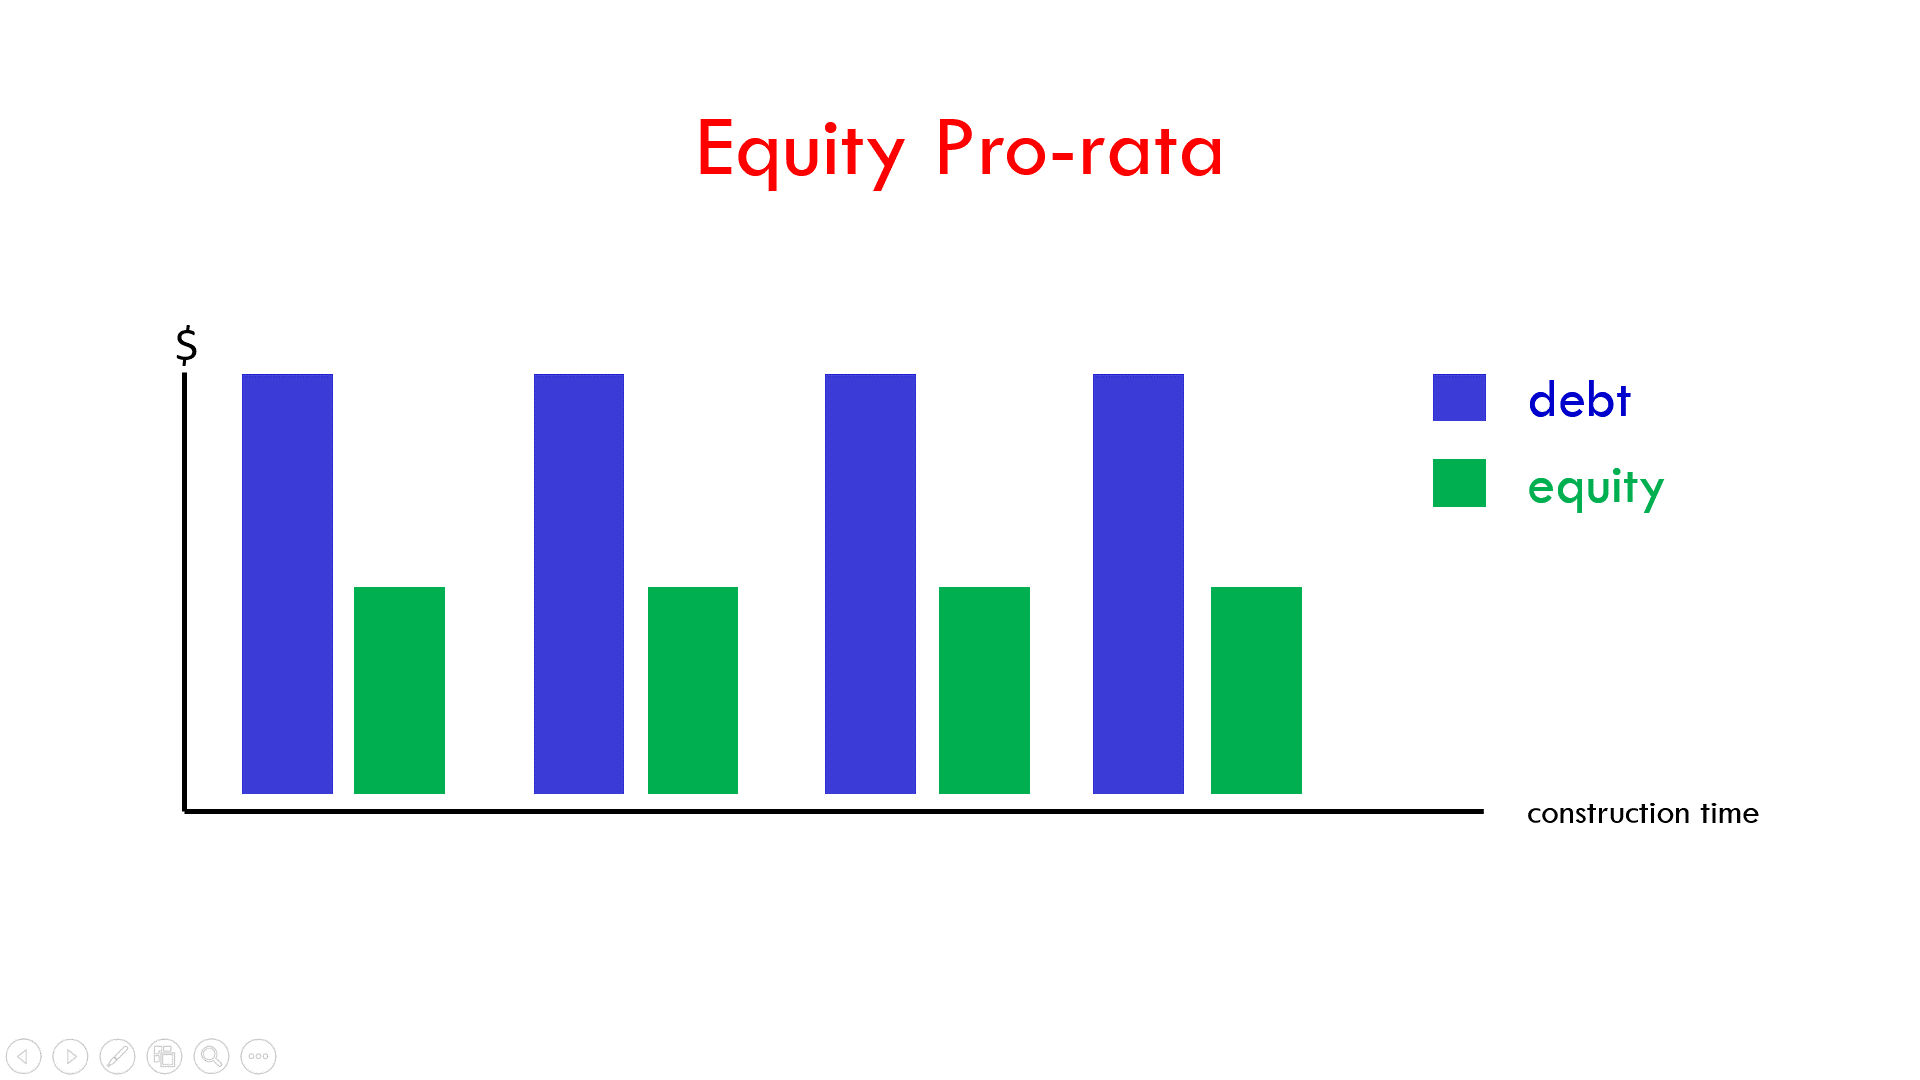 Equity funding pro-rata